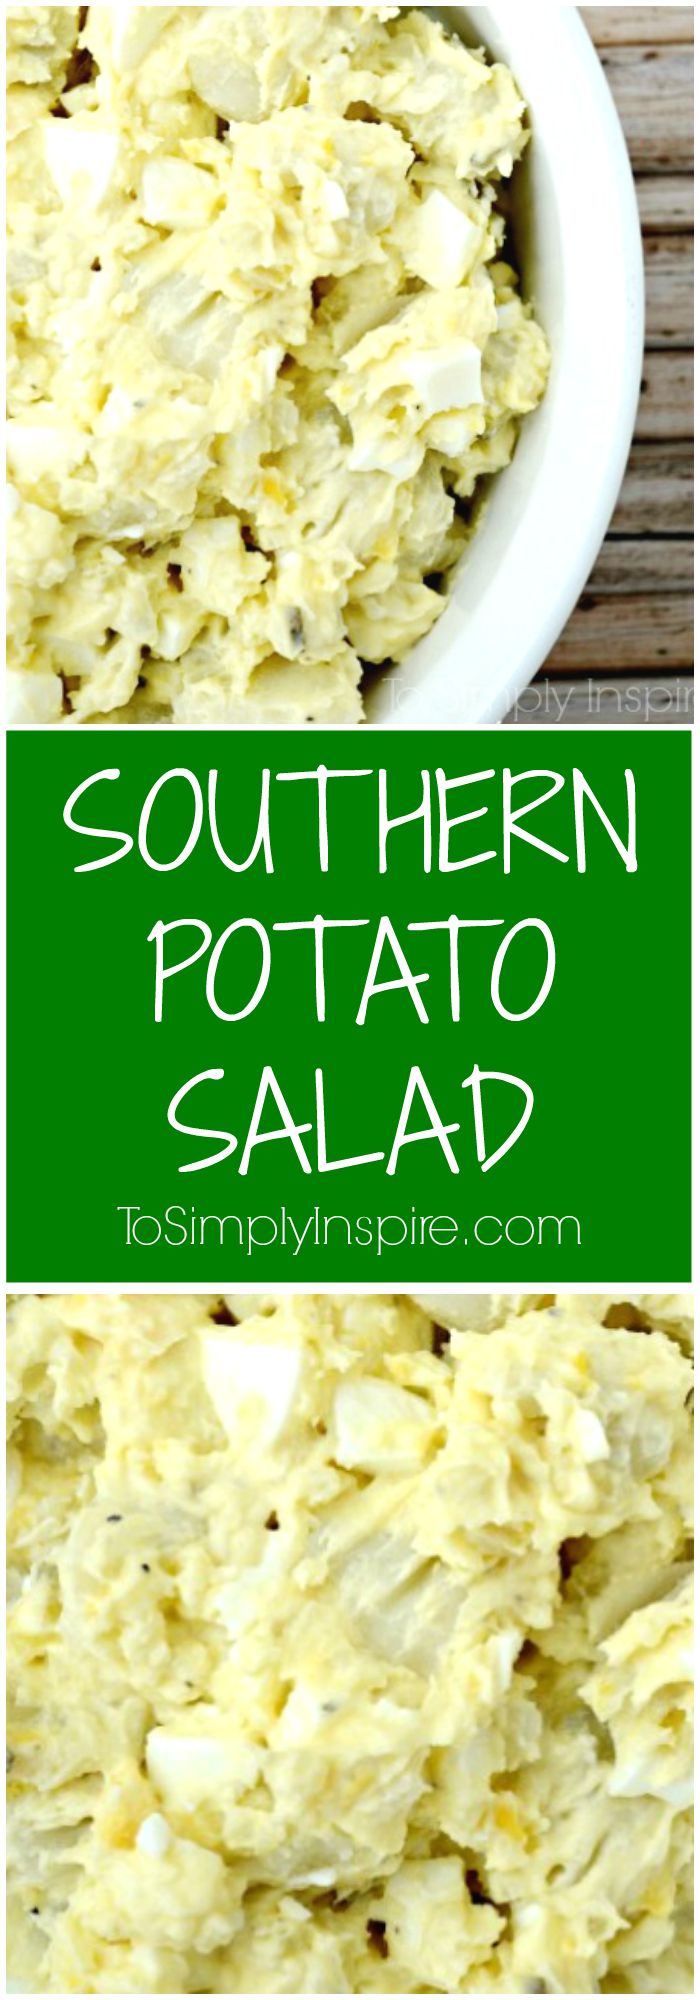 Southern Potato Salad Recipe - The Best Classic, Creamy Version